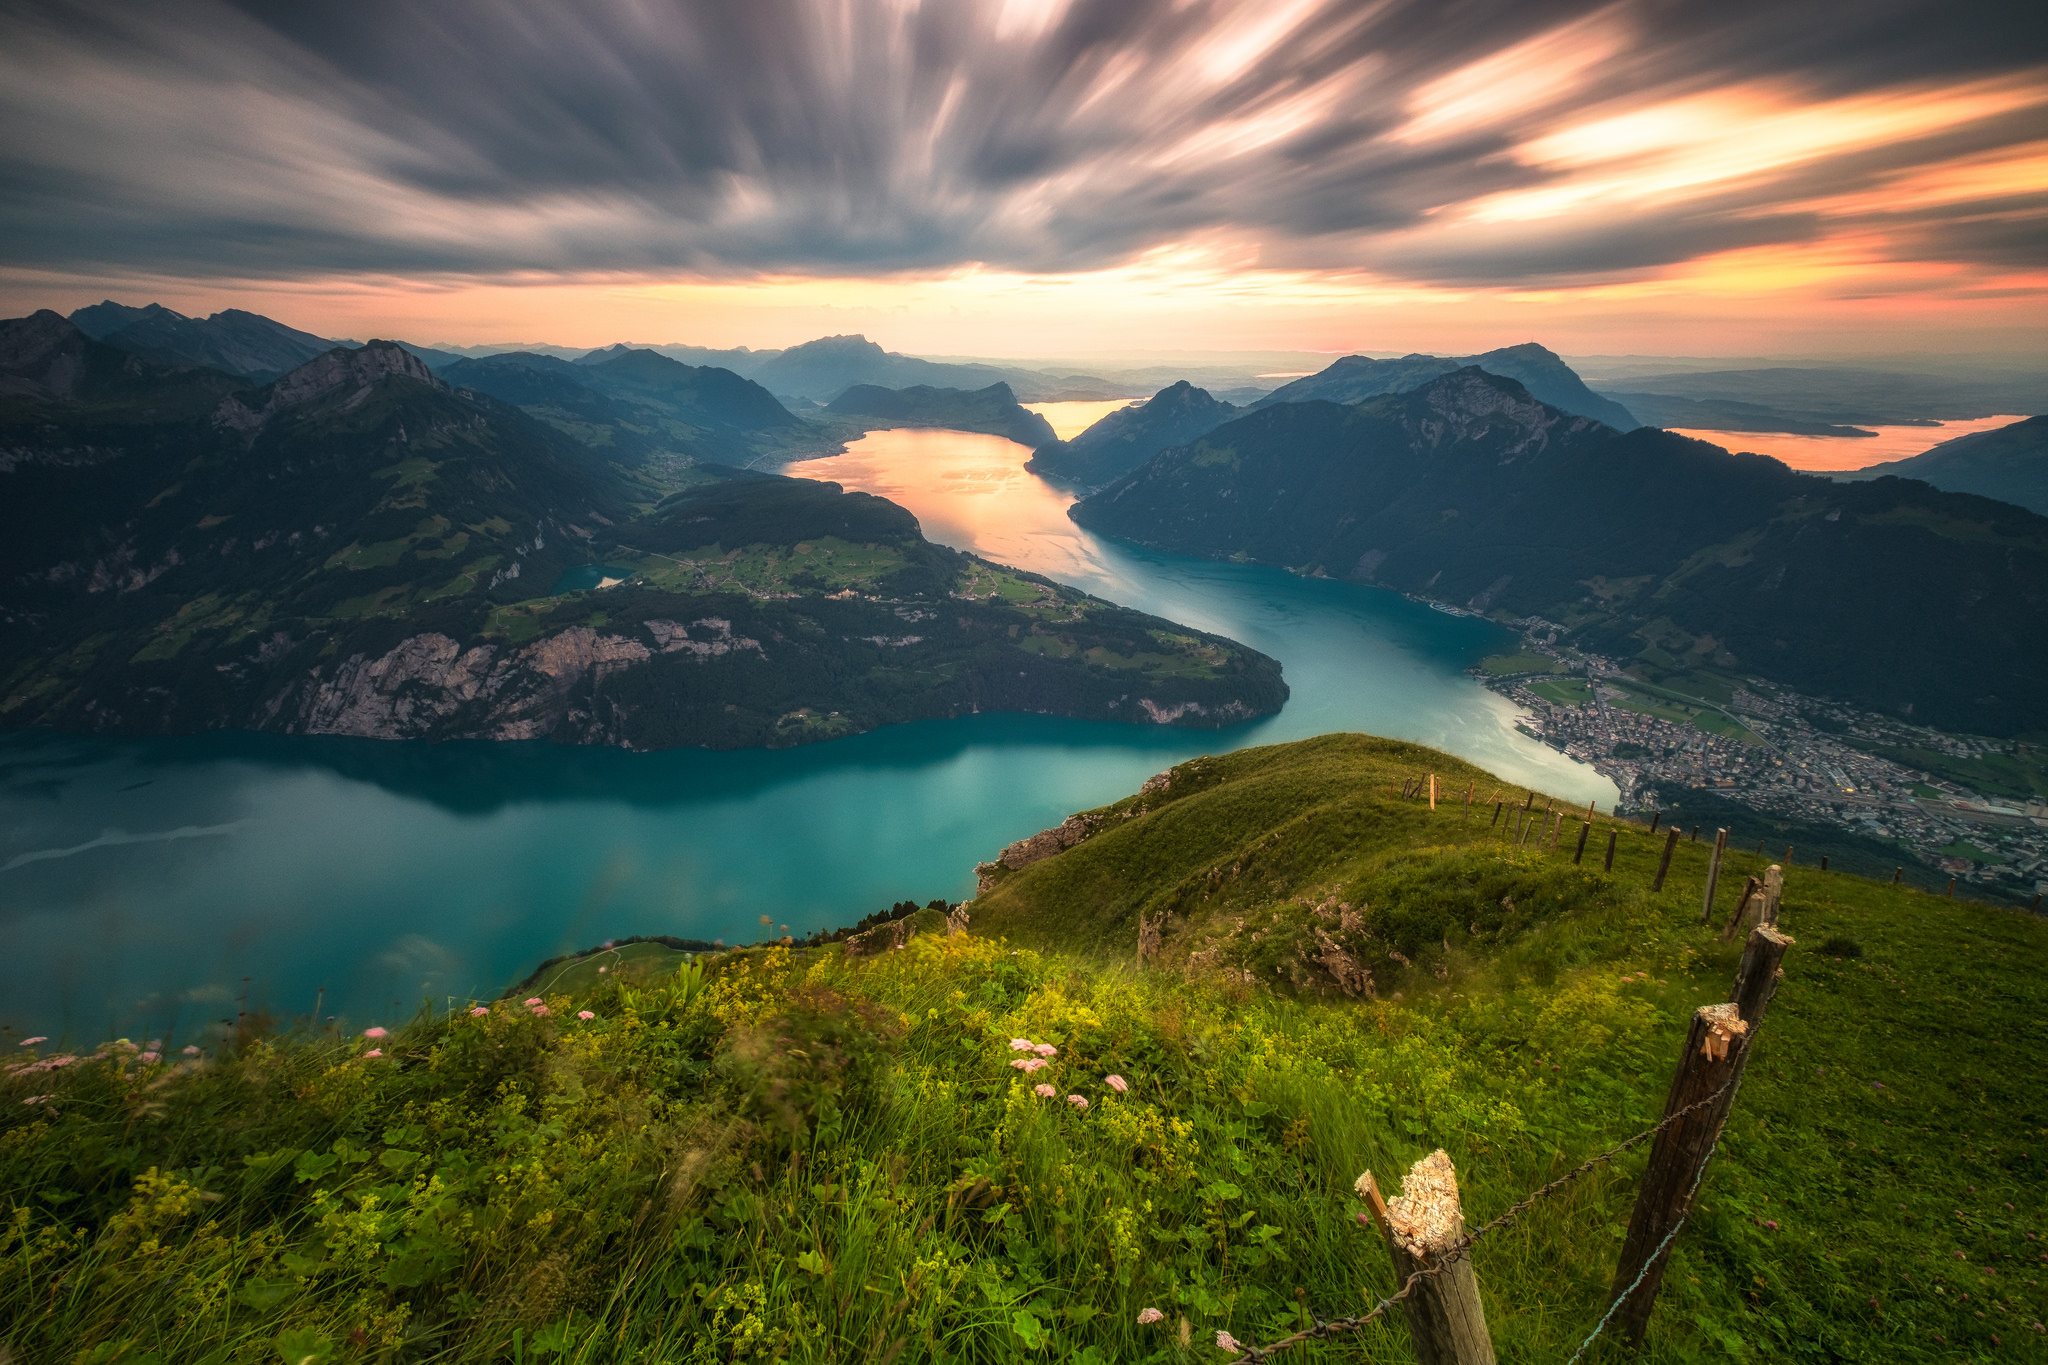 Swiss Alps Landscape by Oliver Wehrli